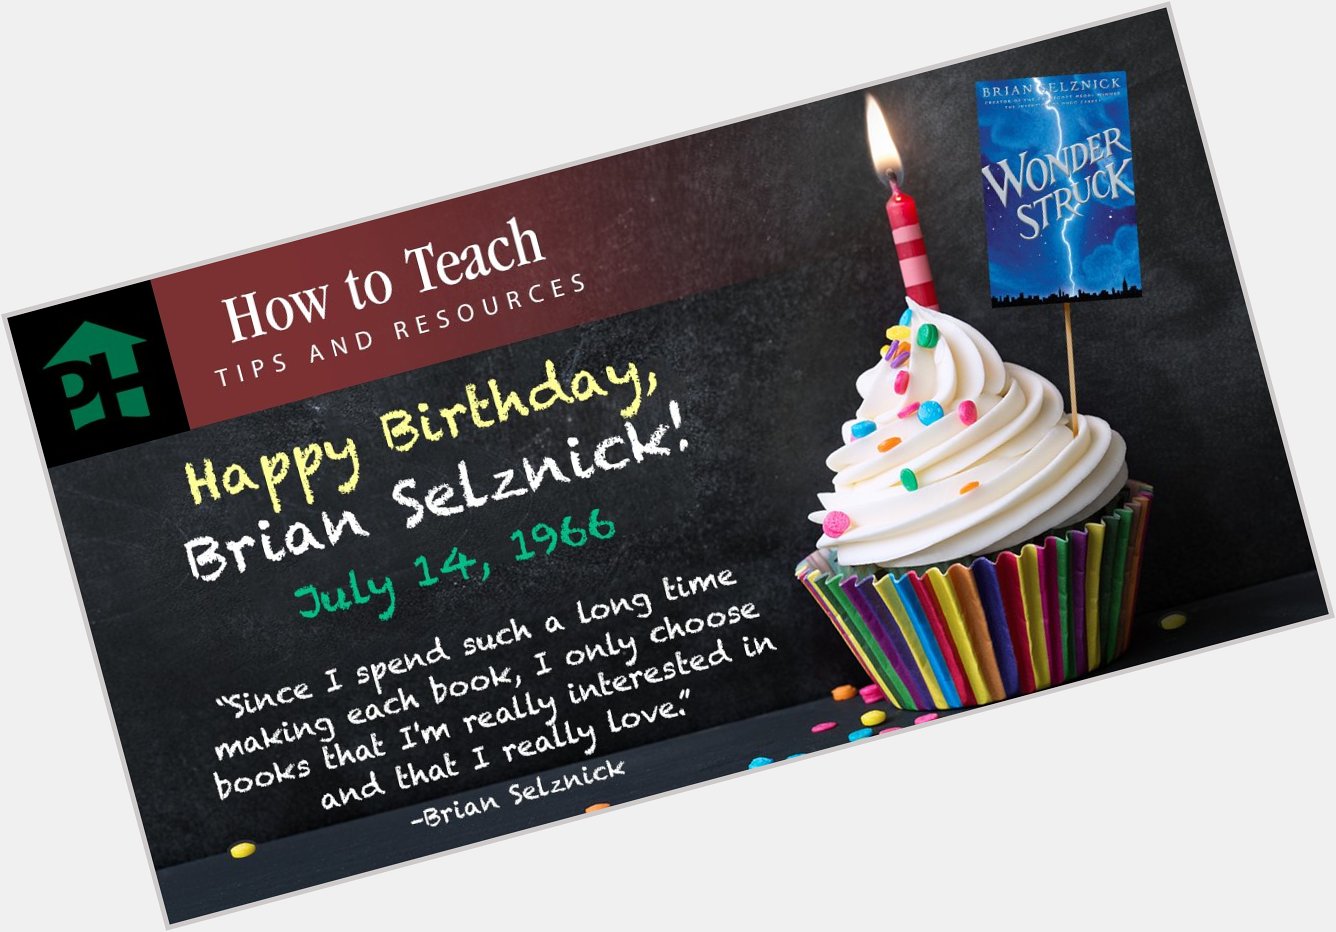 Happy birthday to \"Wonderstruck\" author, Brian Selznick!  